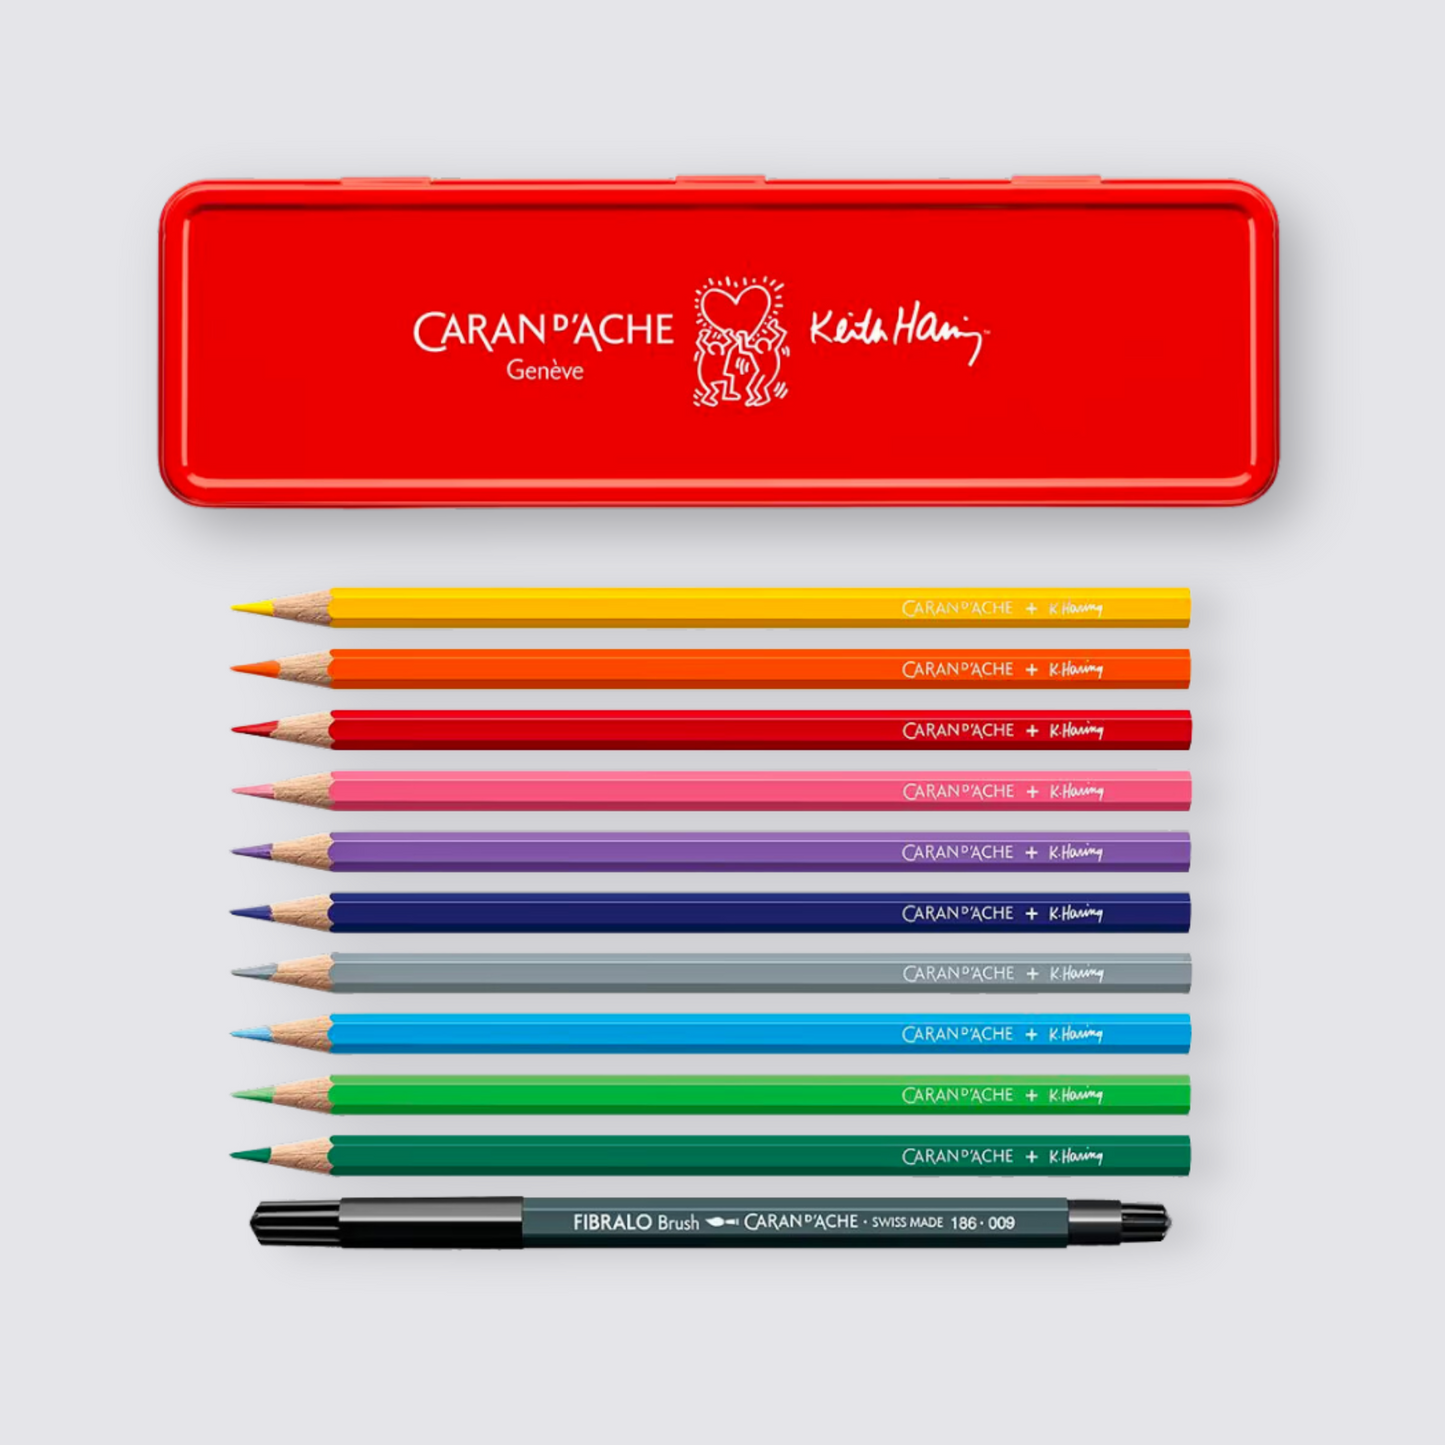 Caran d'ache keith haring colouring pencil set in metal gift tin